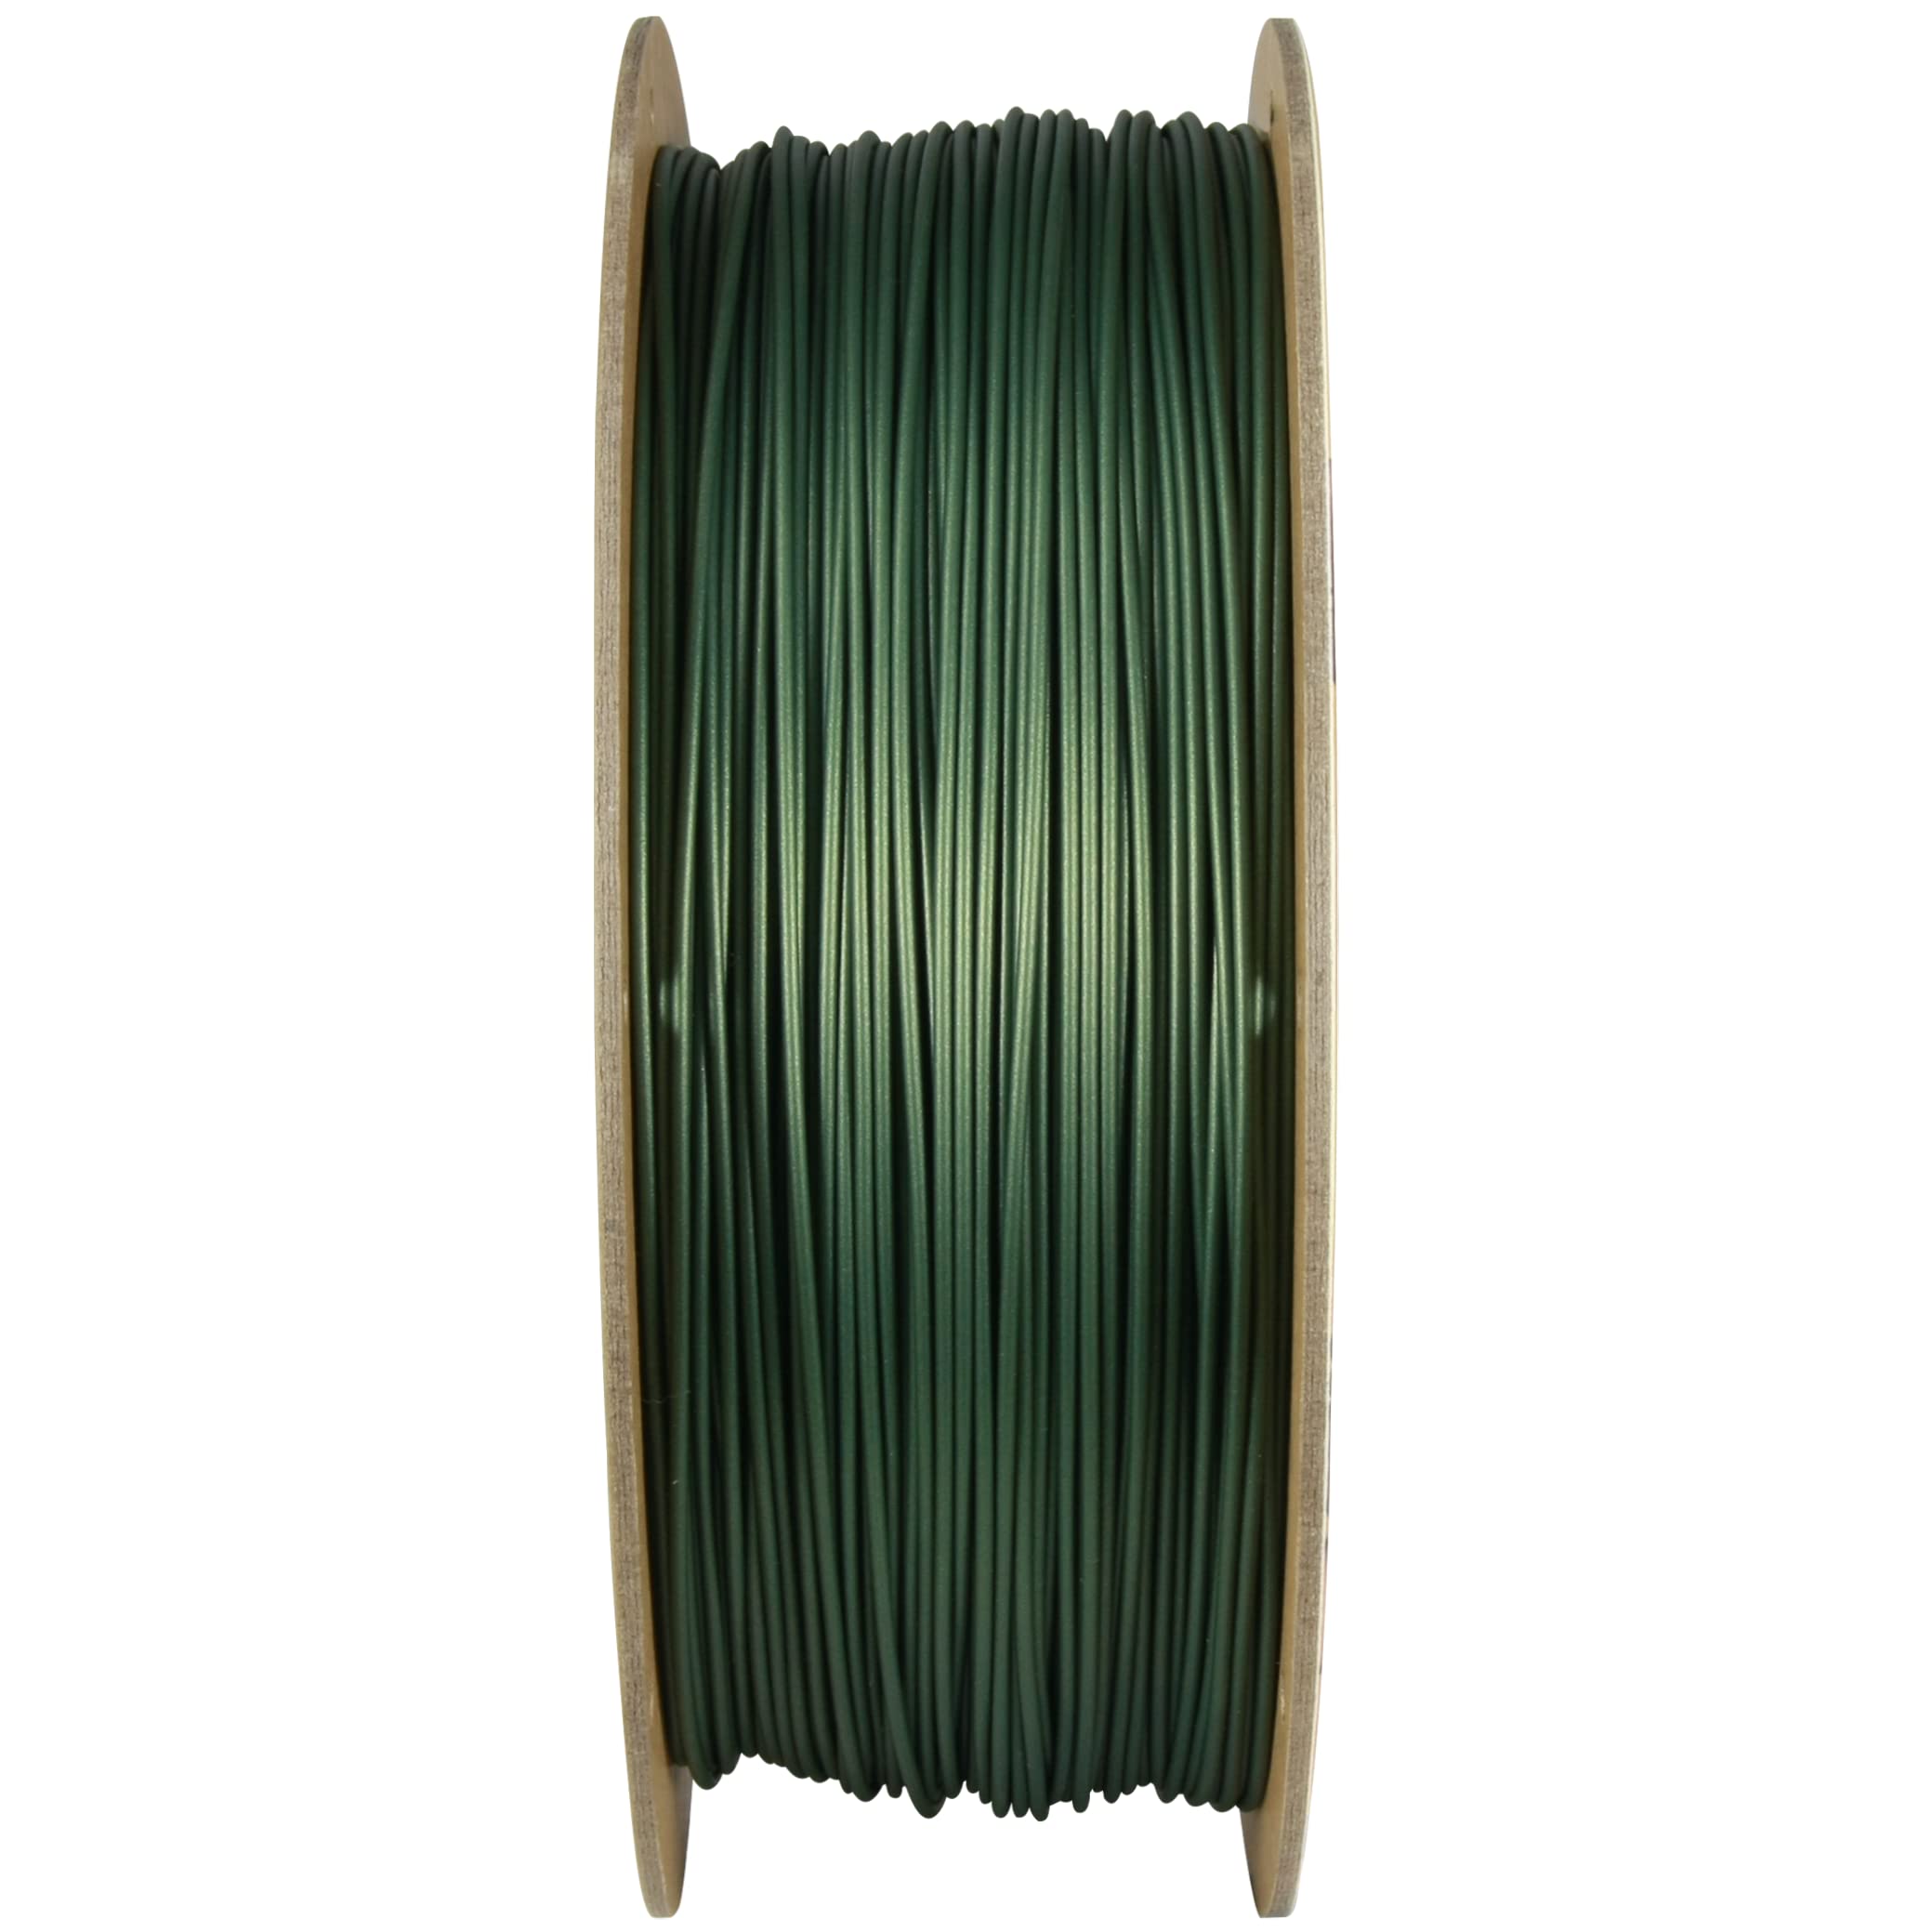 Polymaker PLA PRO Filament 175mm LM Sparkle green creator Spool 1kg - PolyLite 175 PLA Filament PRO Tough & High Rigidity 3D Pri